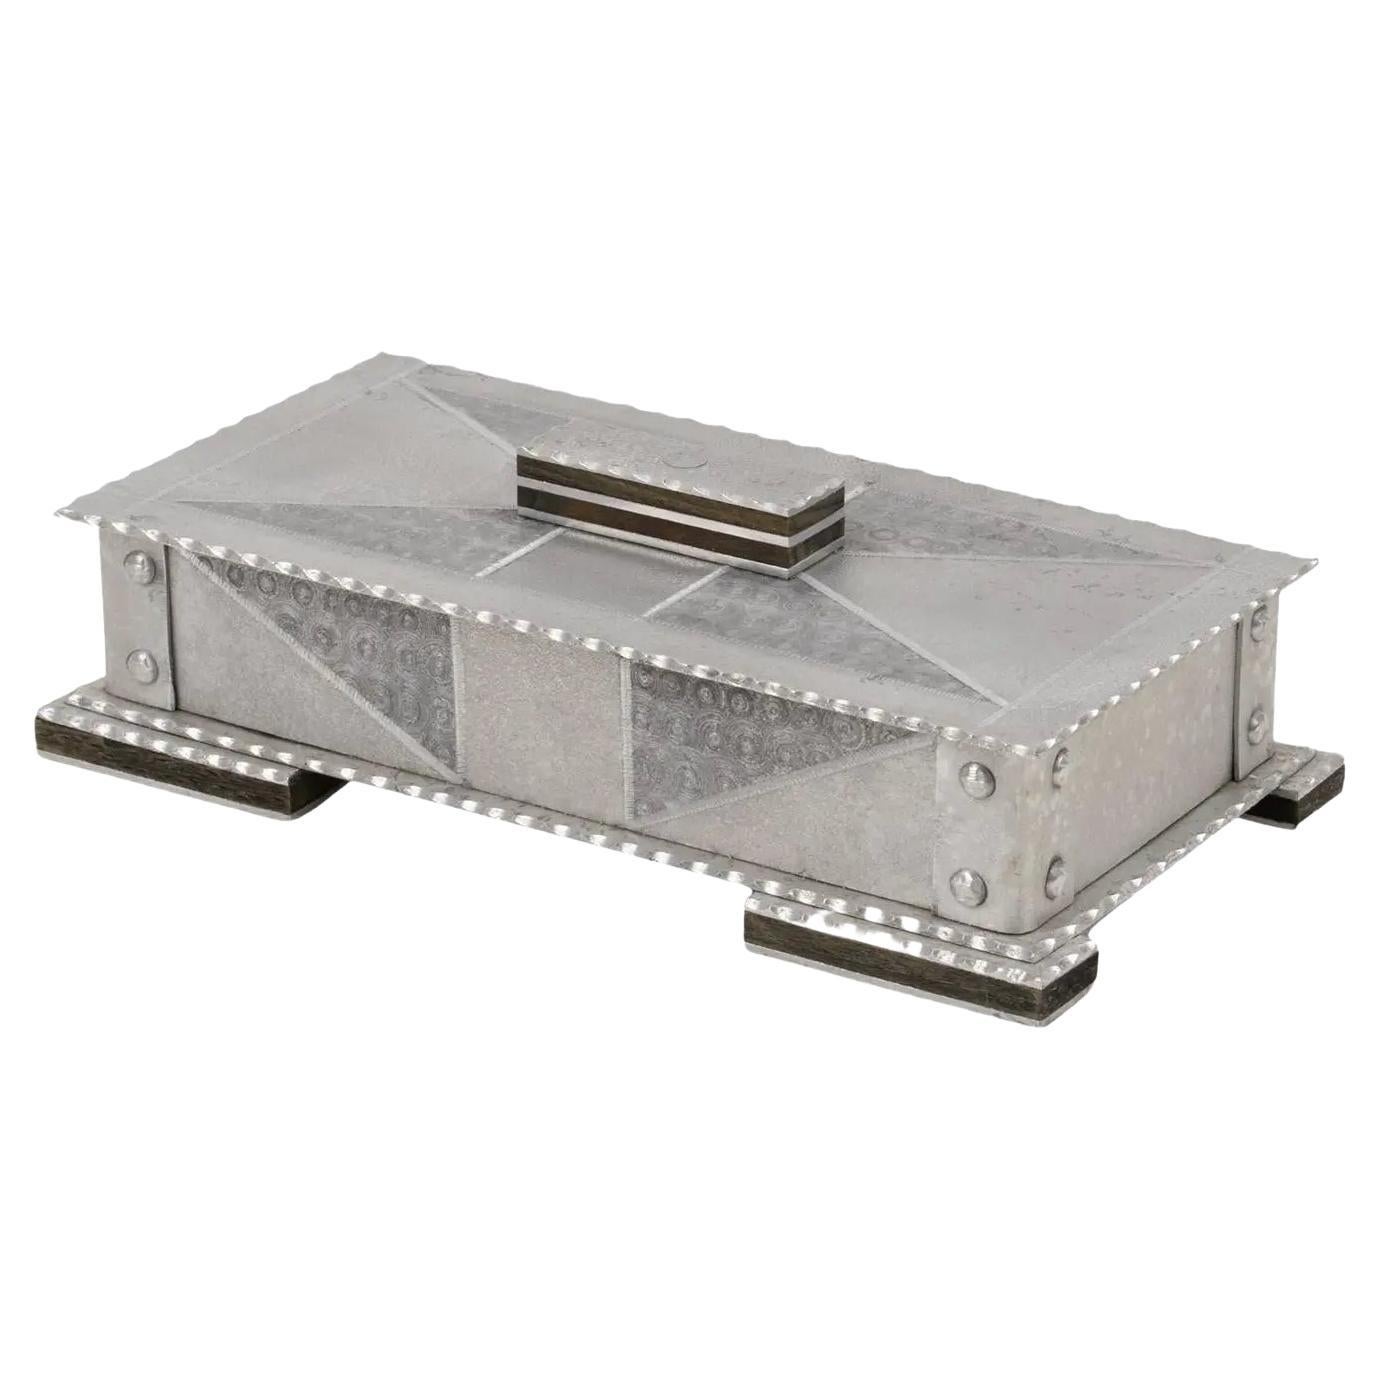 Bauhaus Arts and Crafts Industrial Textured Aluminum Box, 1920s